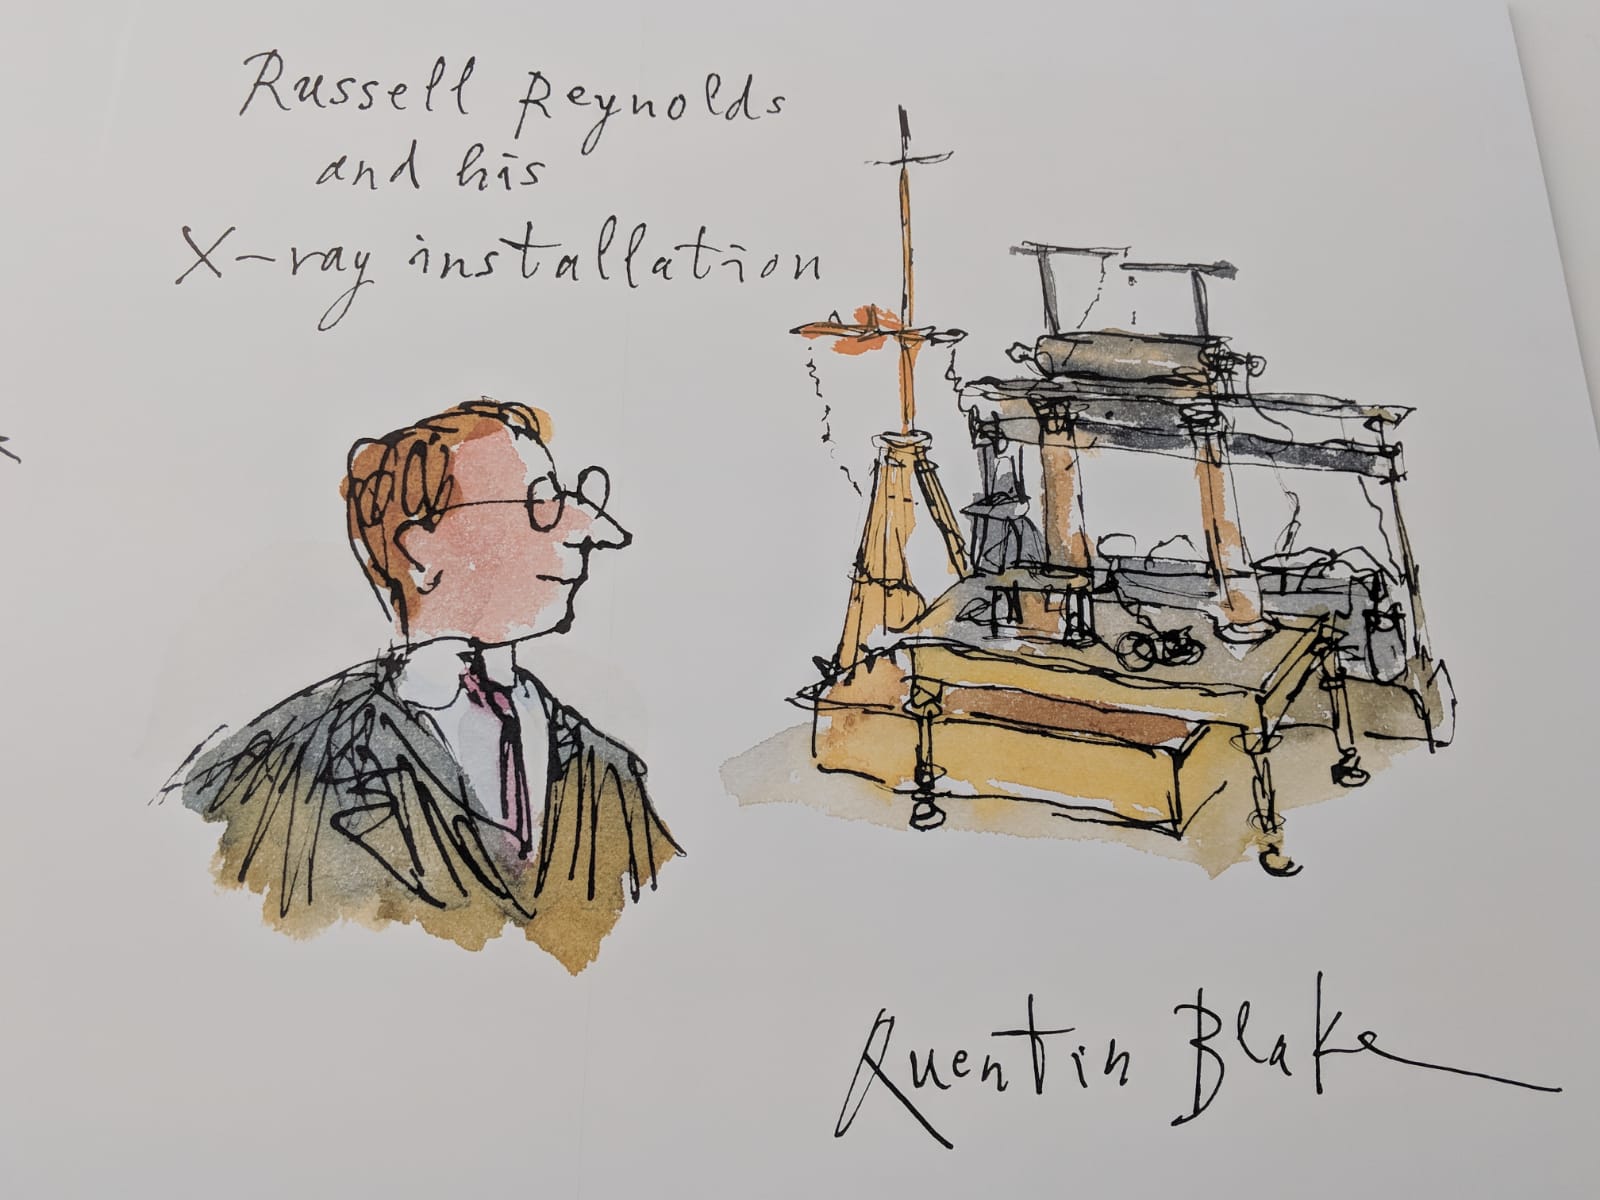 Illustration of X-ray pioneer Russell Reynolds